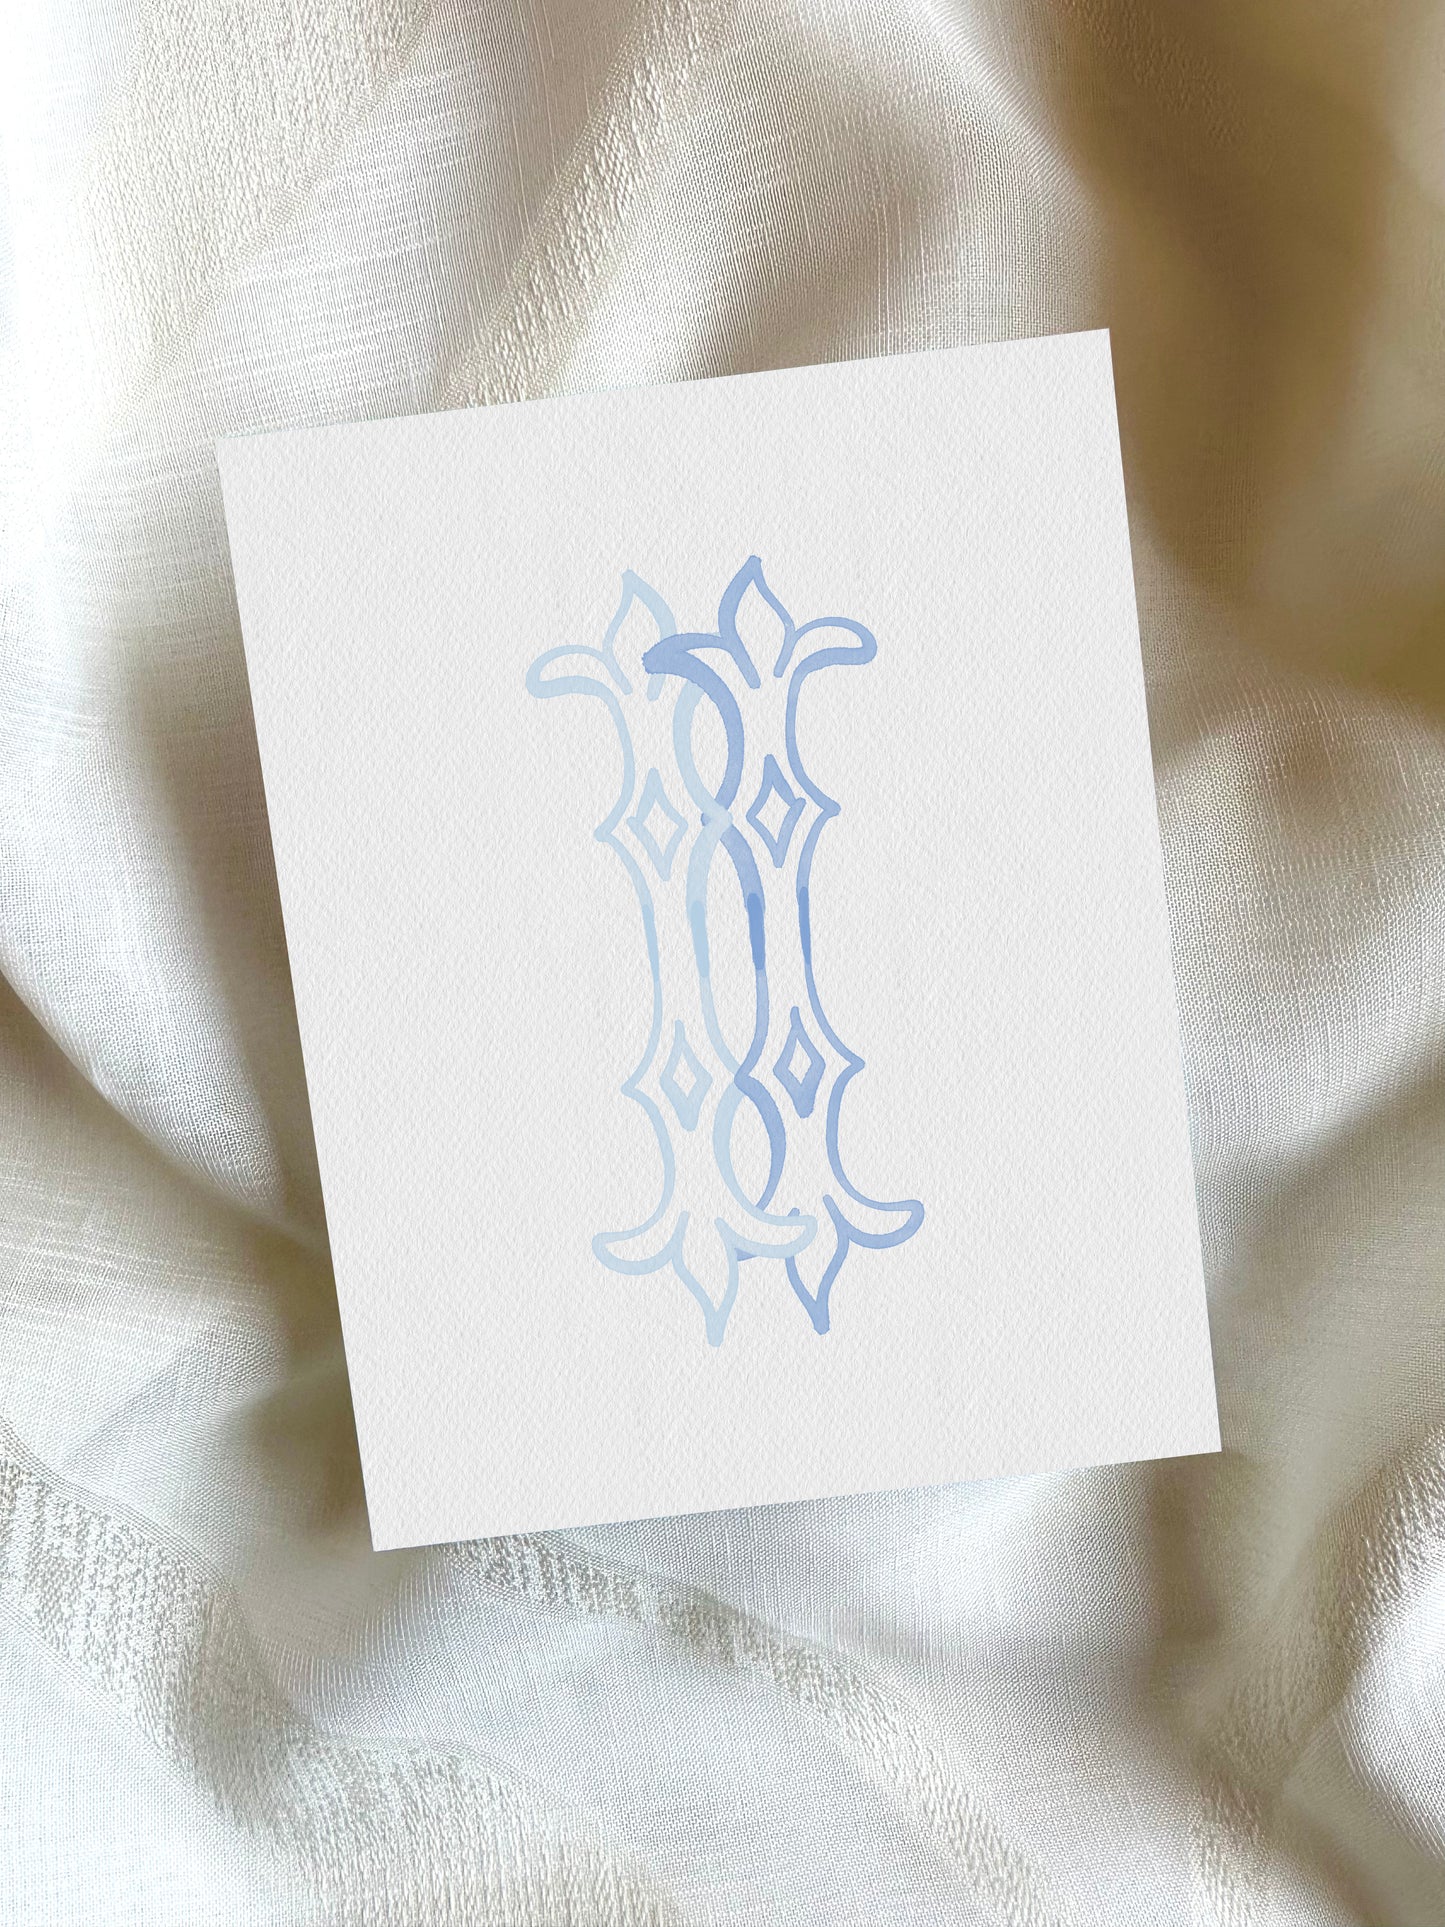 2 Letter Monogram with Letters II ii | Digital Download - Wedding Monogram SVG, Personal Logo, Wedding Logo for Wedding Invitations The Wedding Crest Lab